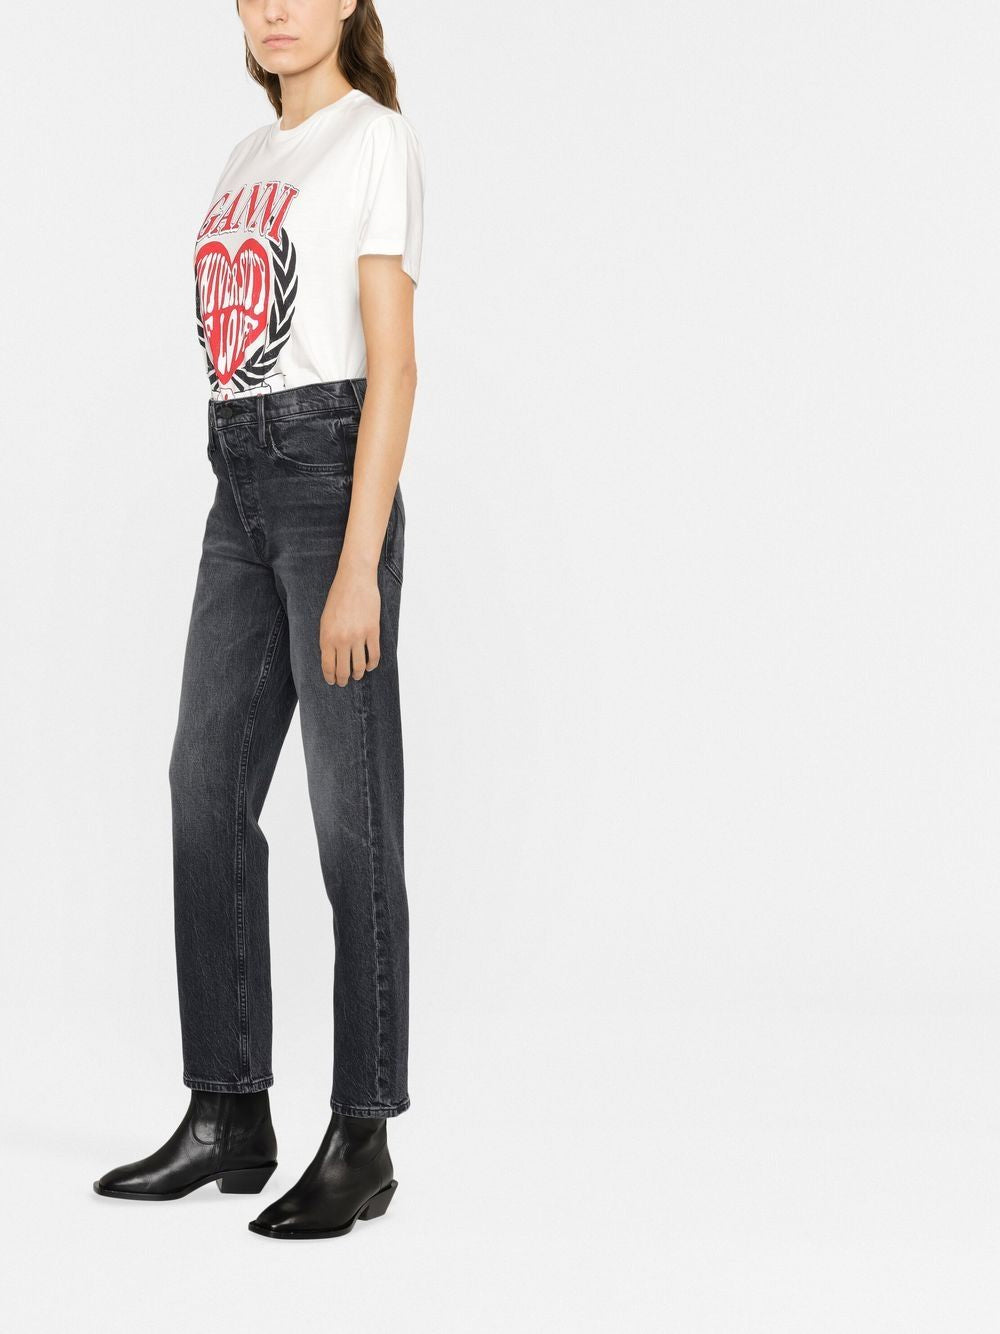 The Tom-Kat high-rise straight-leg jeans